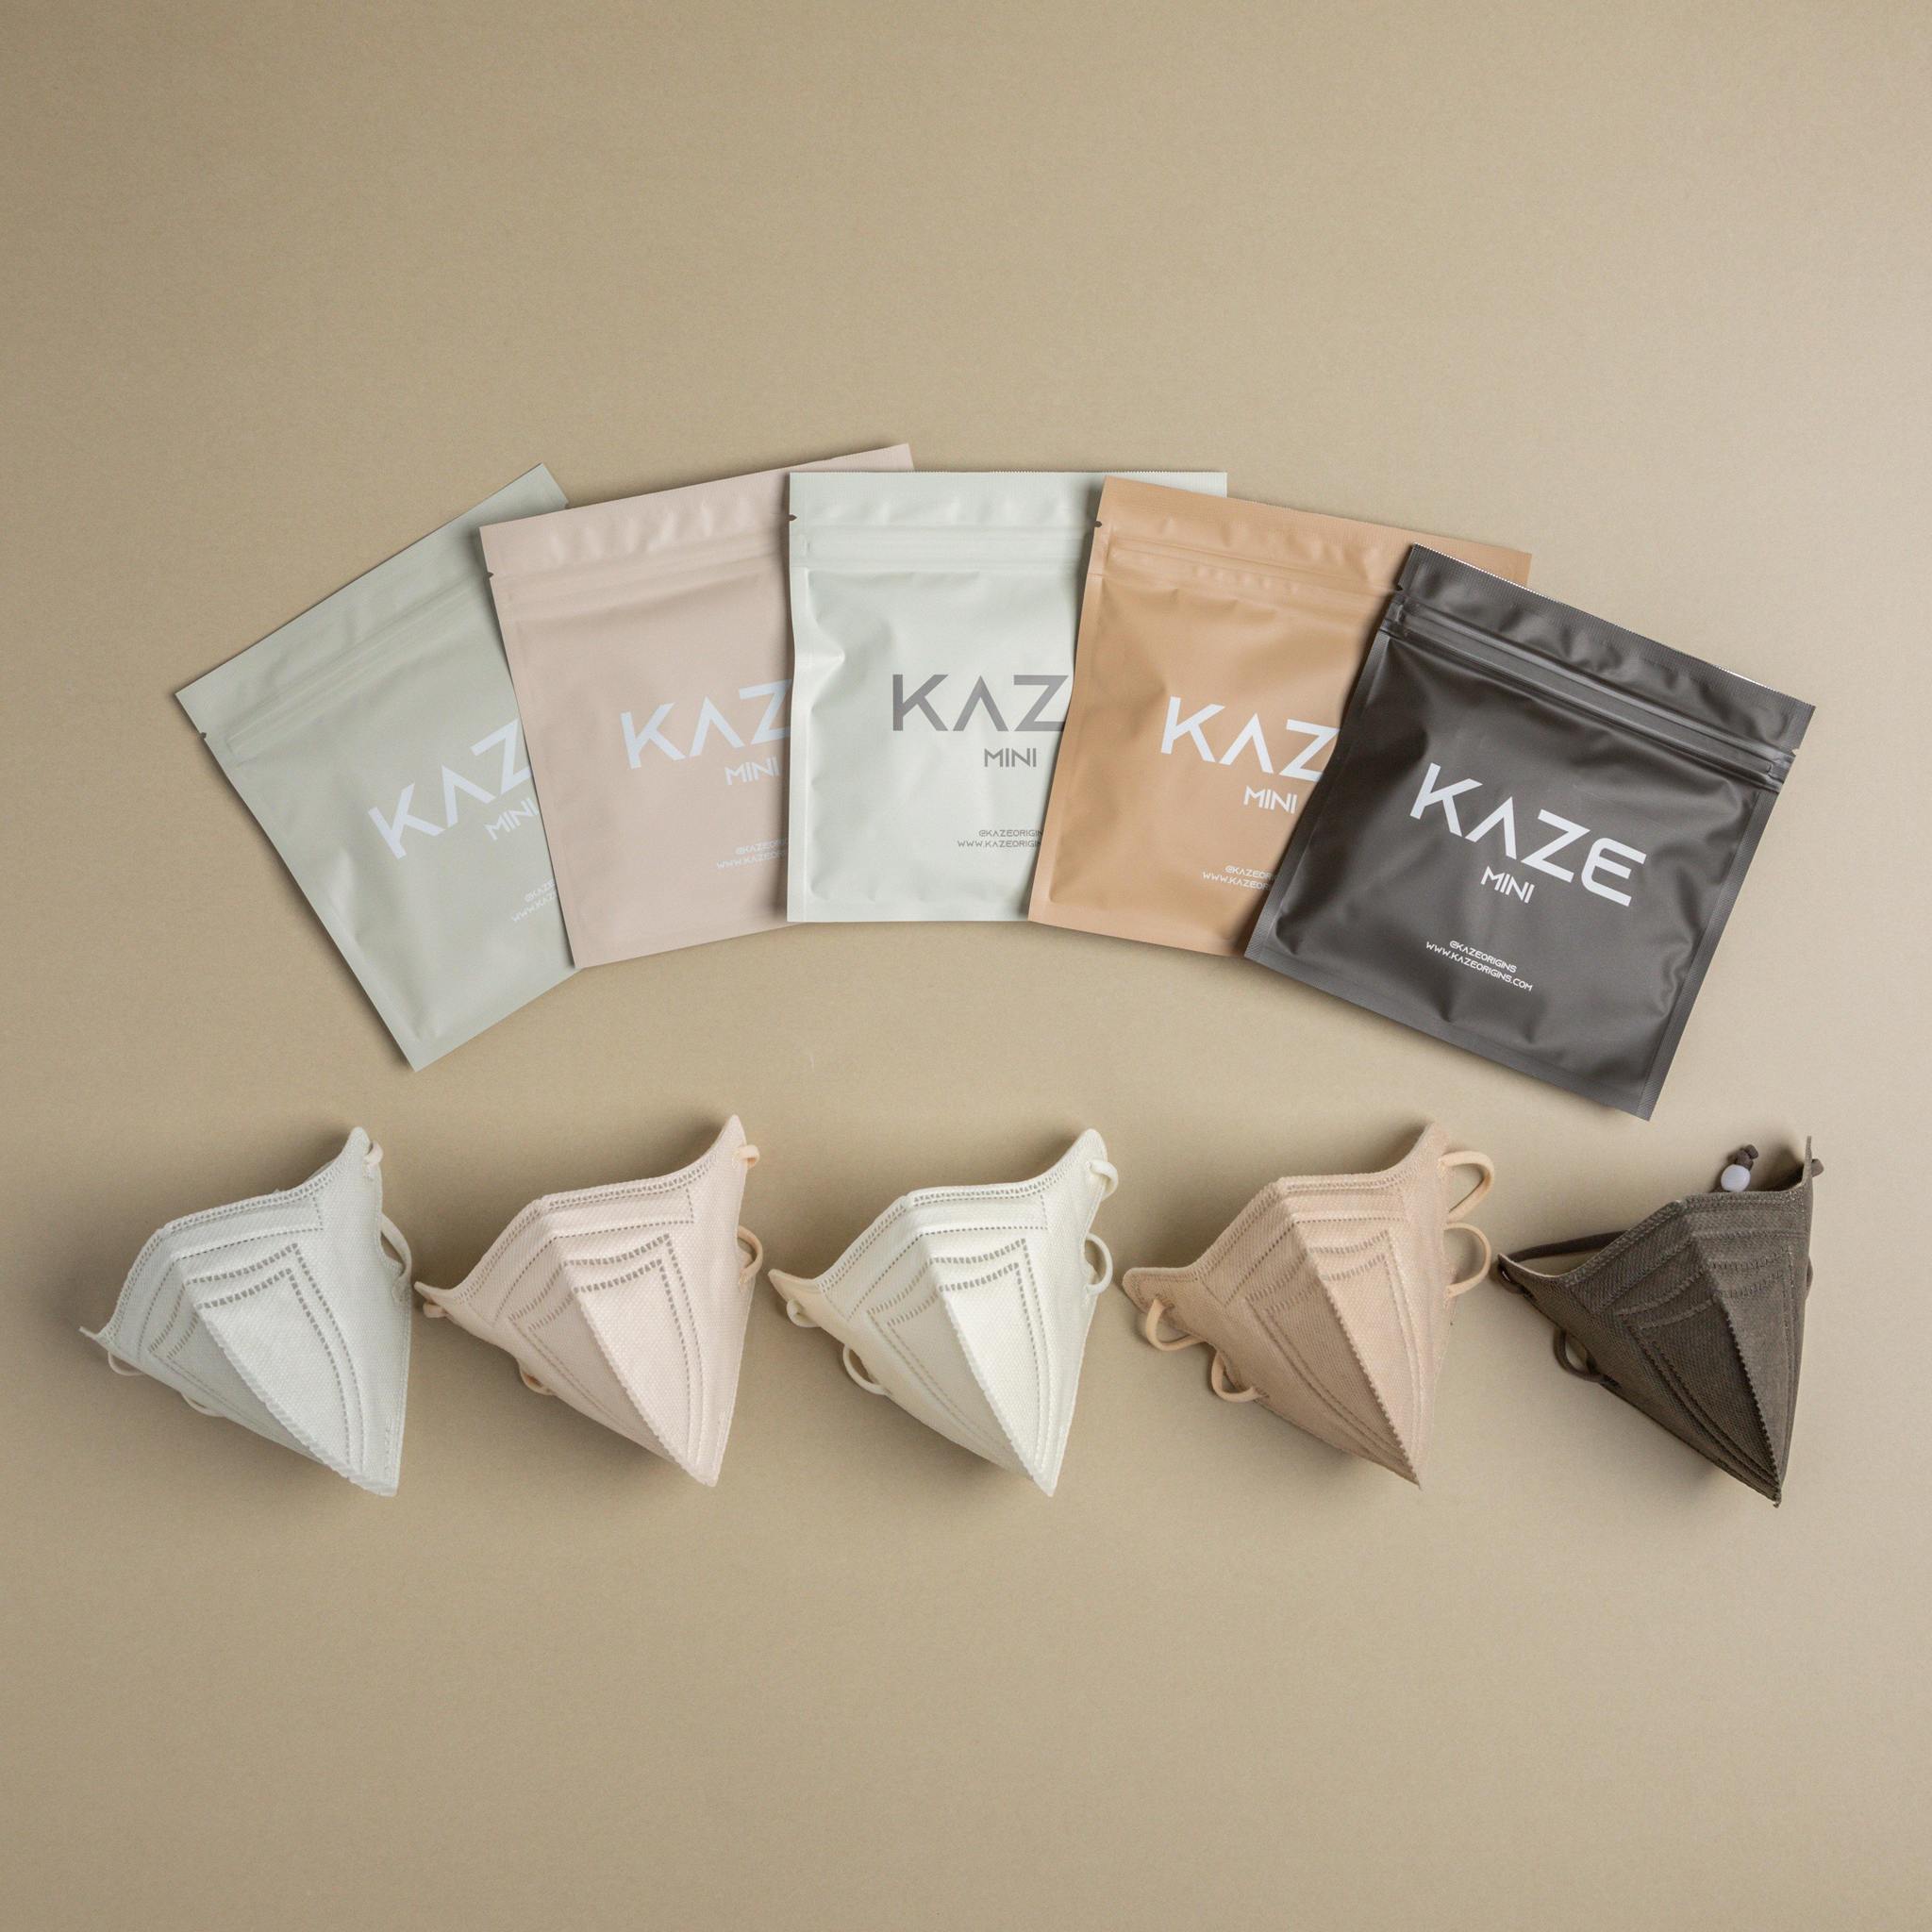 KAZE Masks - Mini Element Series